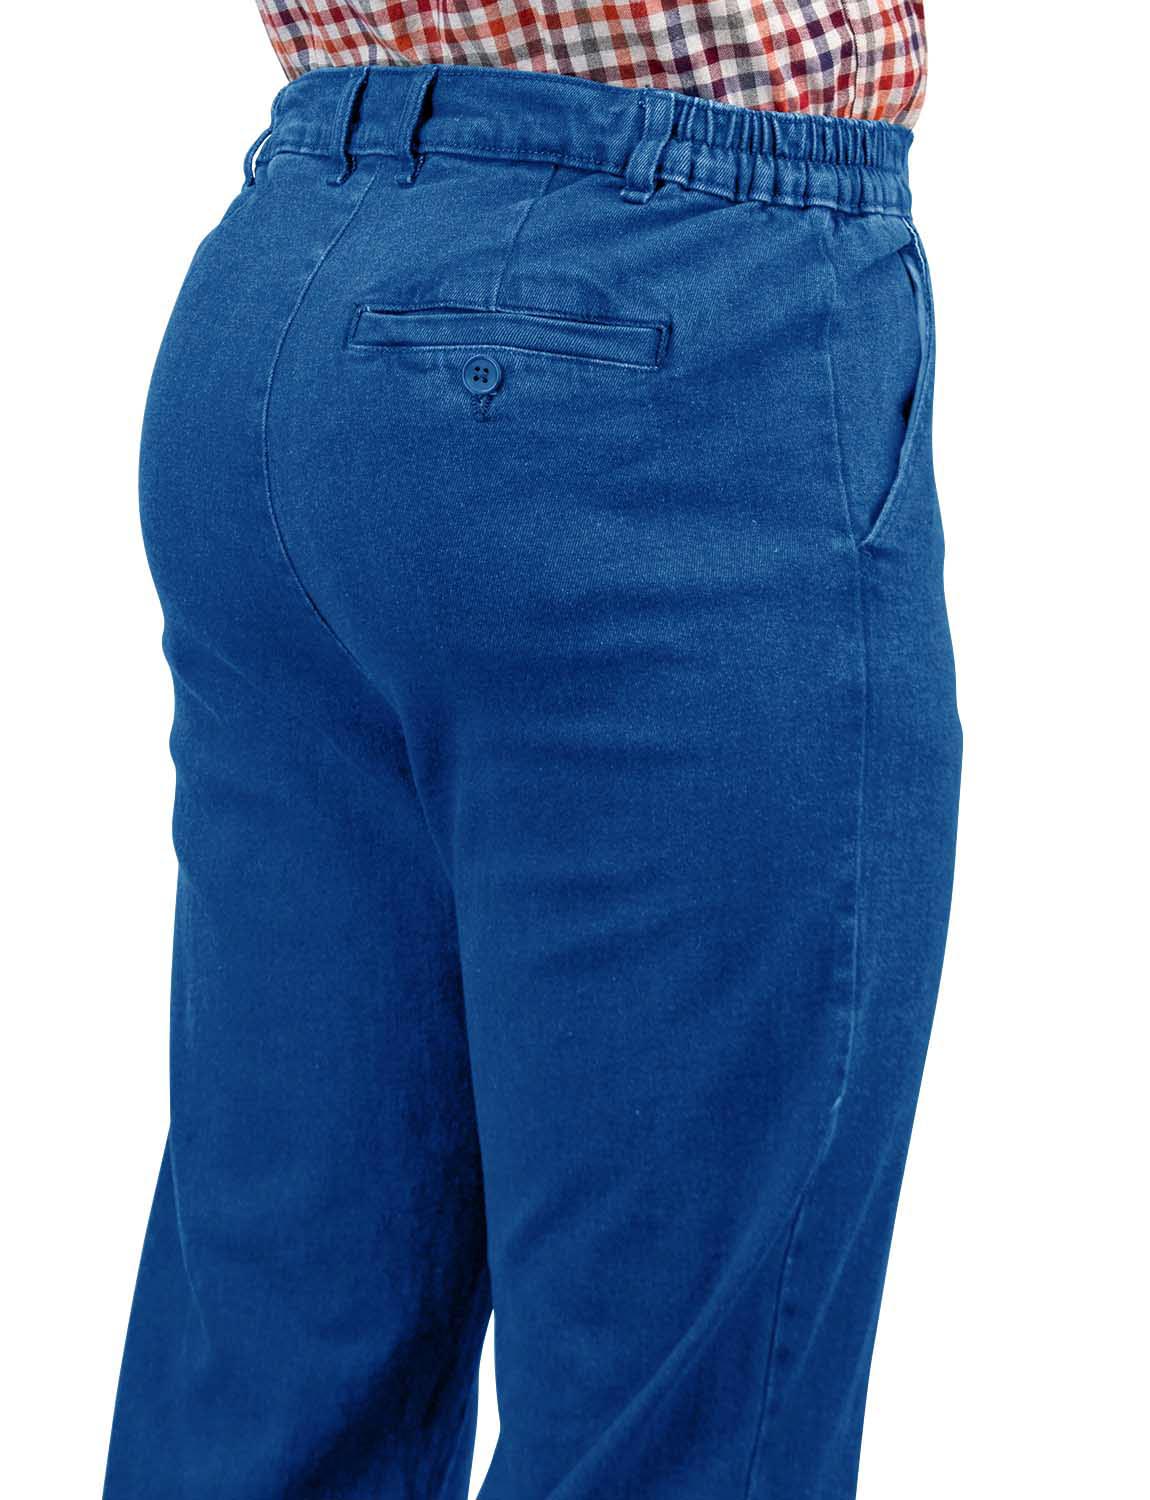 Chums high-rise denim elasticated stretch cotton jean | eBay